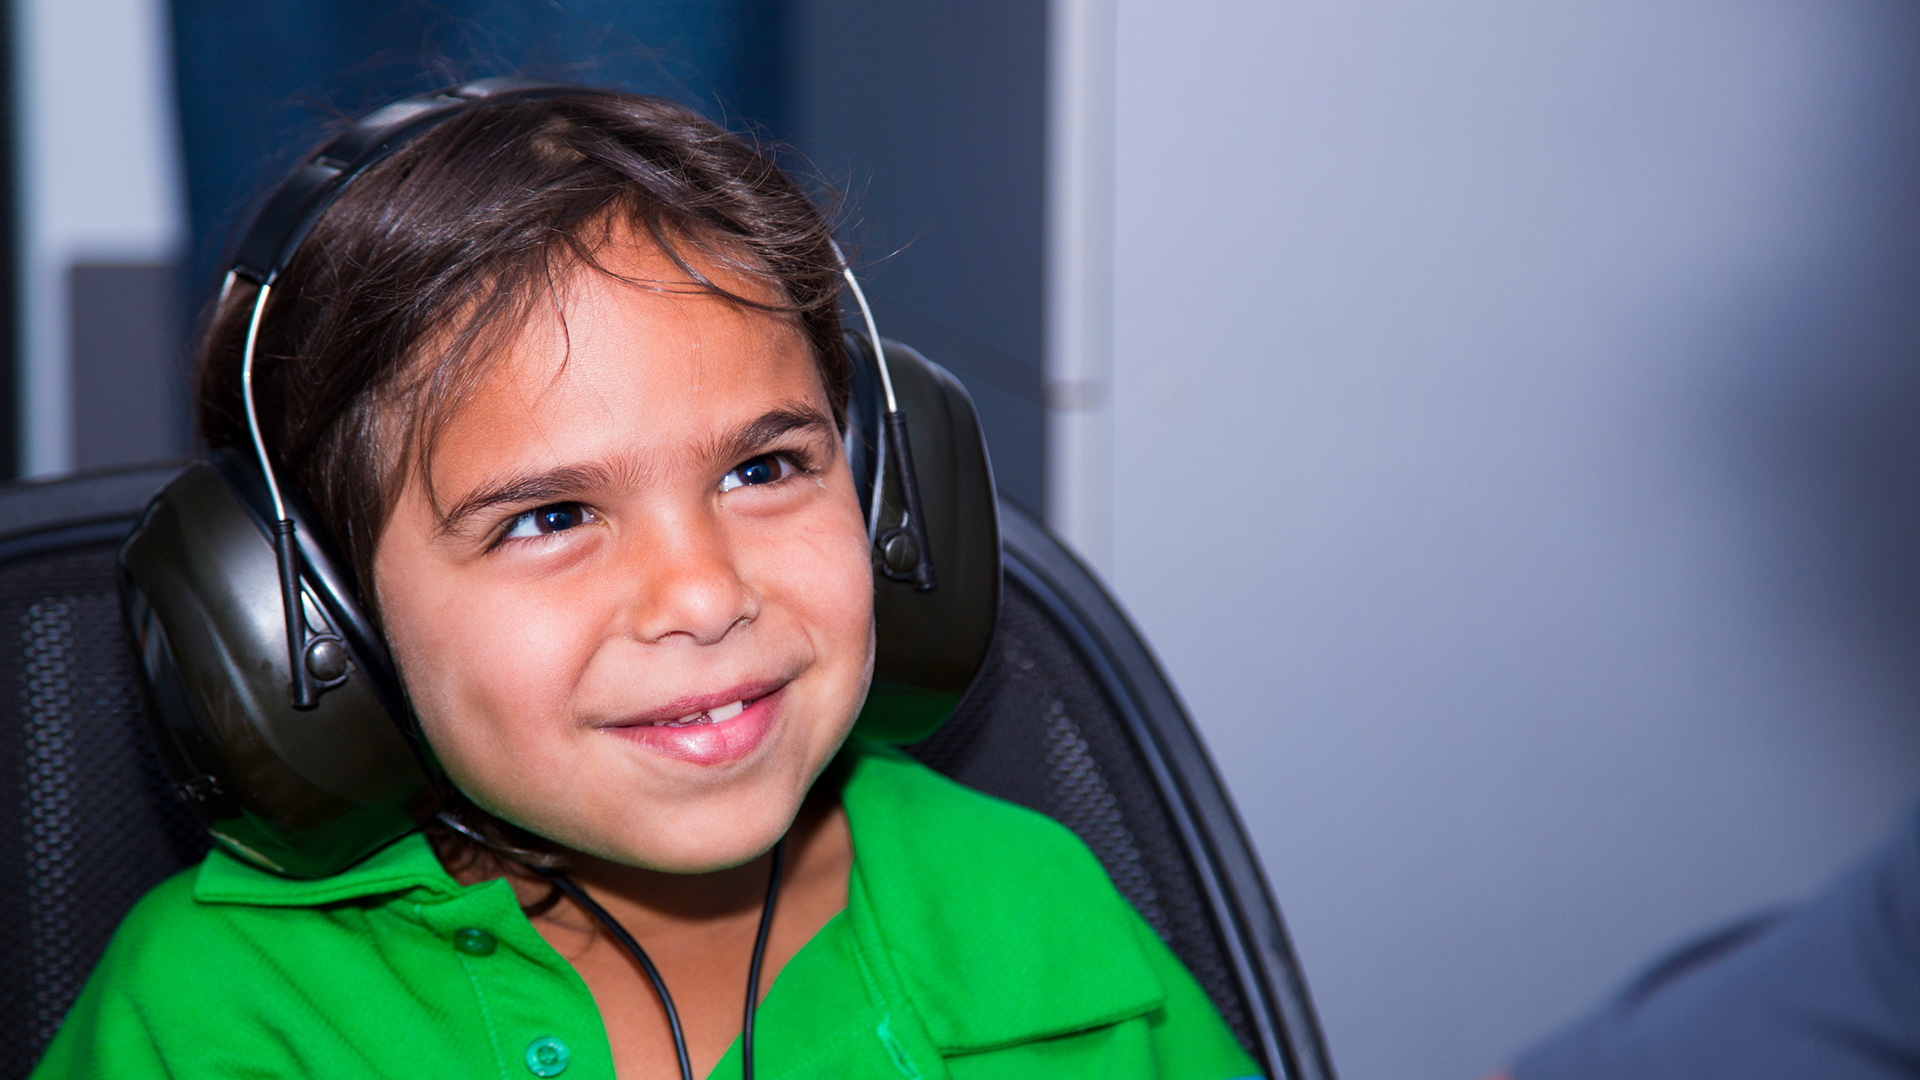 a child wearing headphones